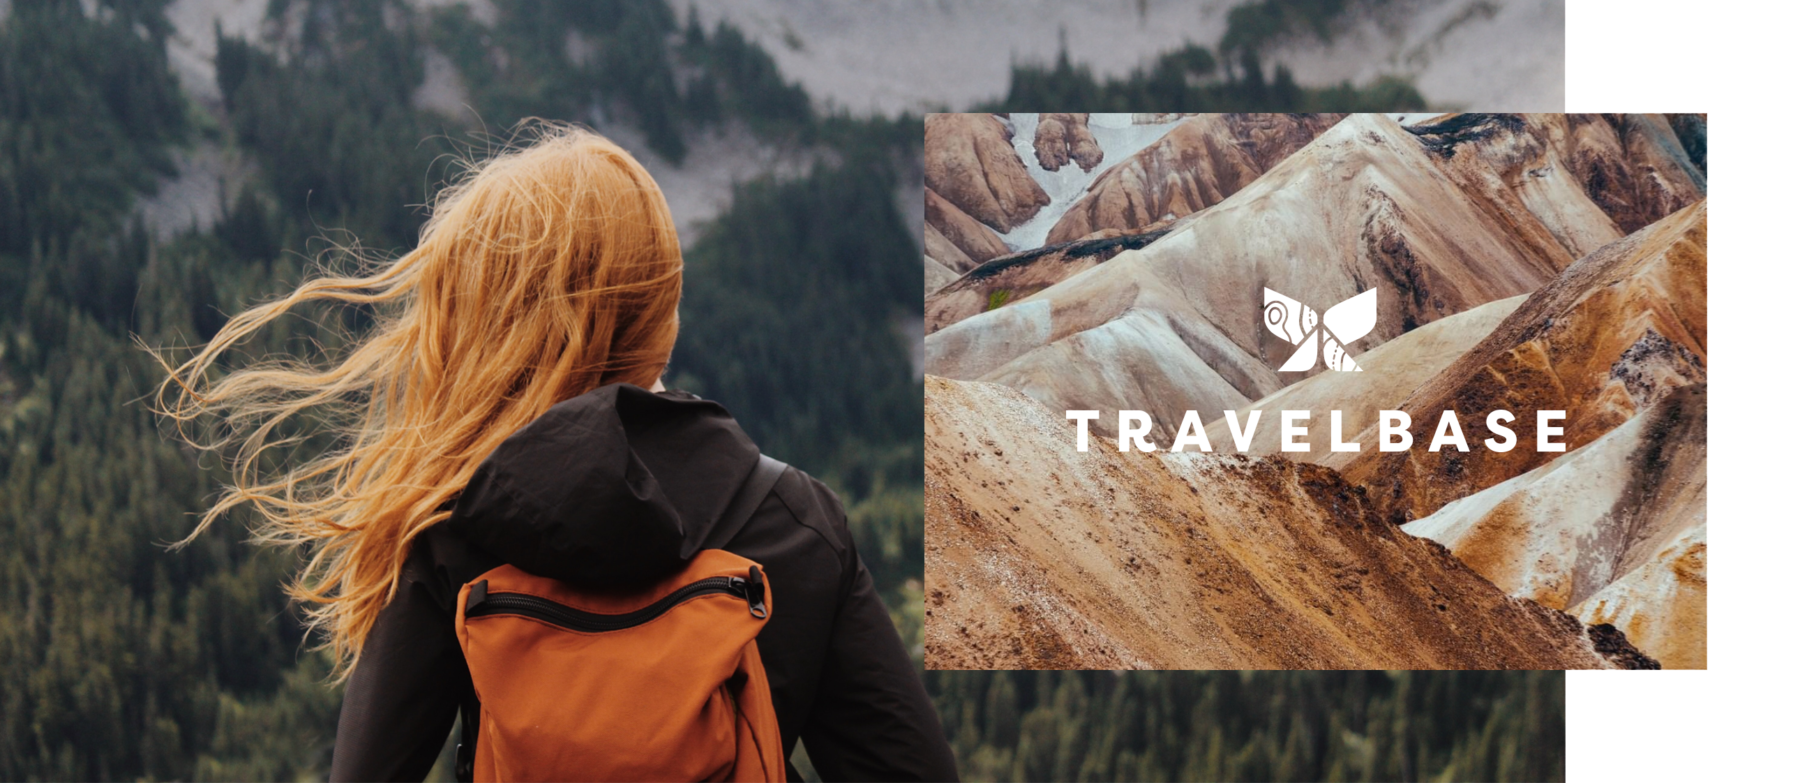 Travelbase logo beeld 3